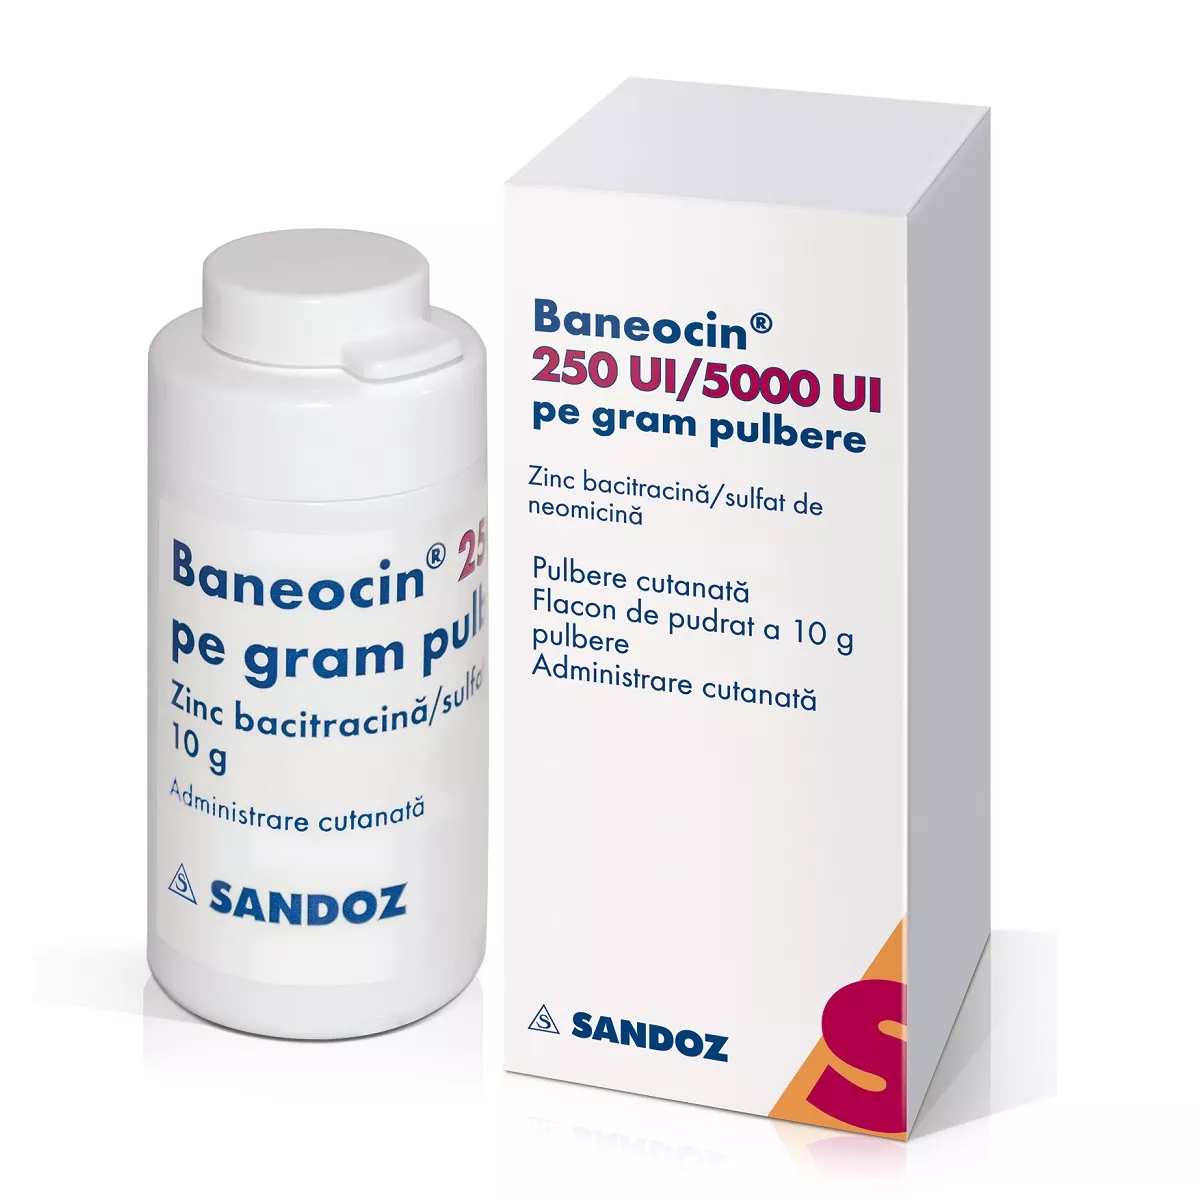 Baneocin pulbere, 250 UI/5000 UI pe gram, 10 g, Sandoz, [],remediumfarm.ro